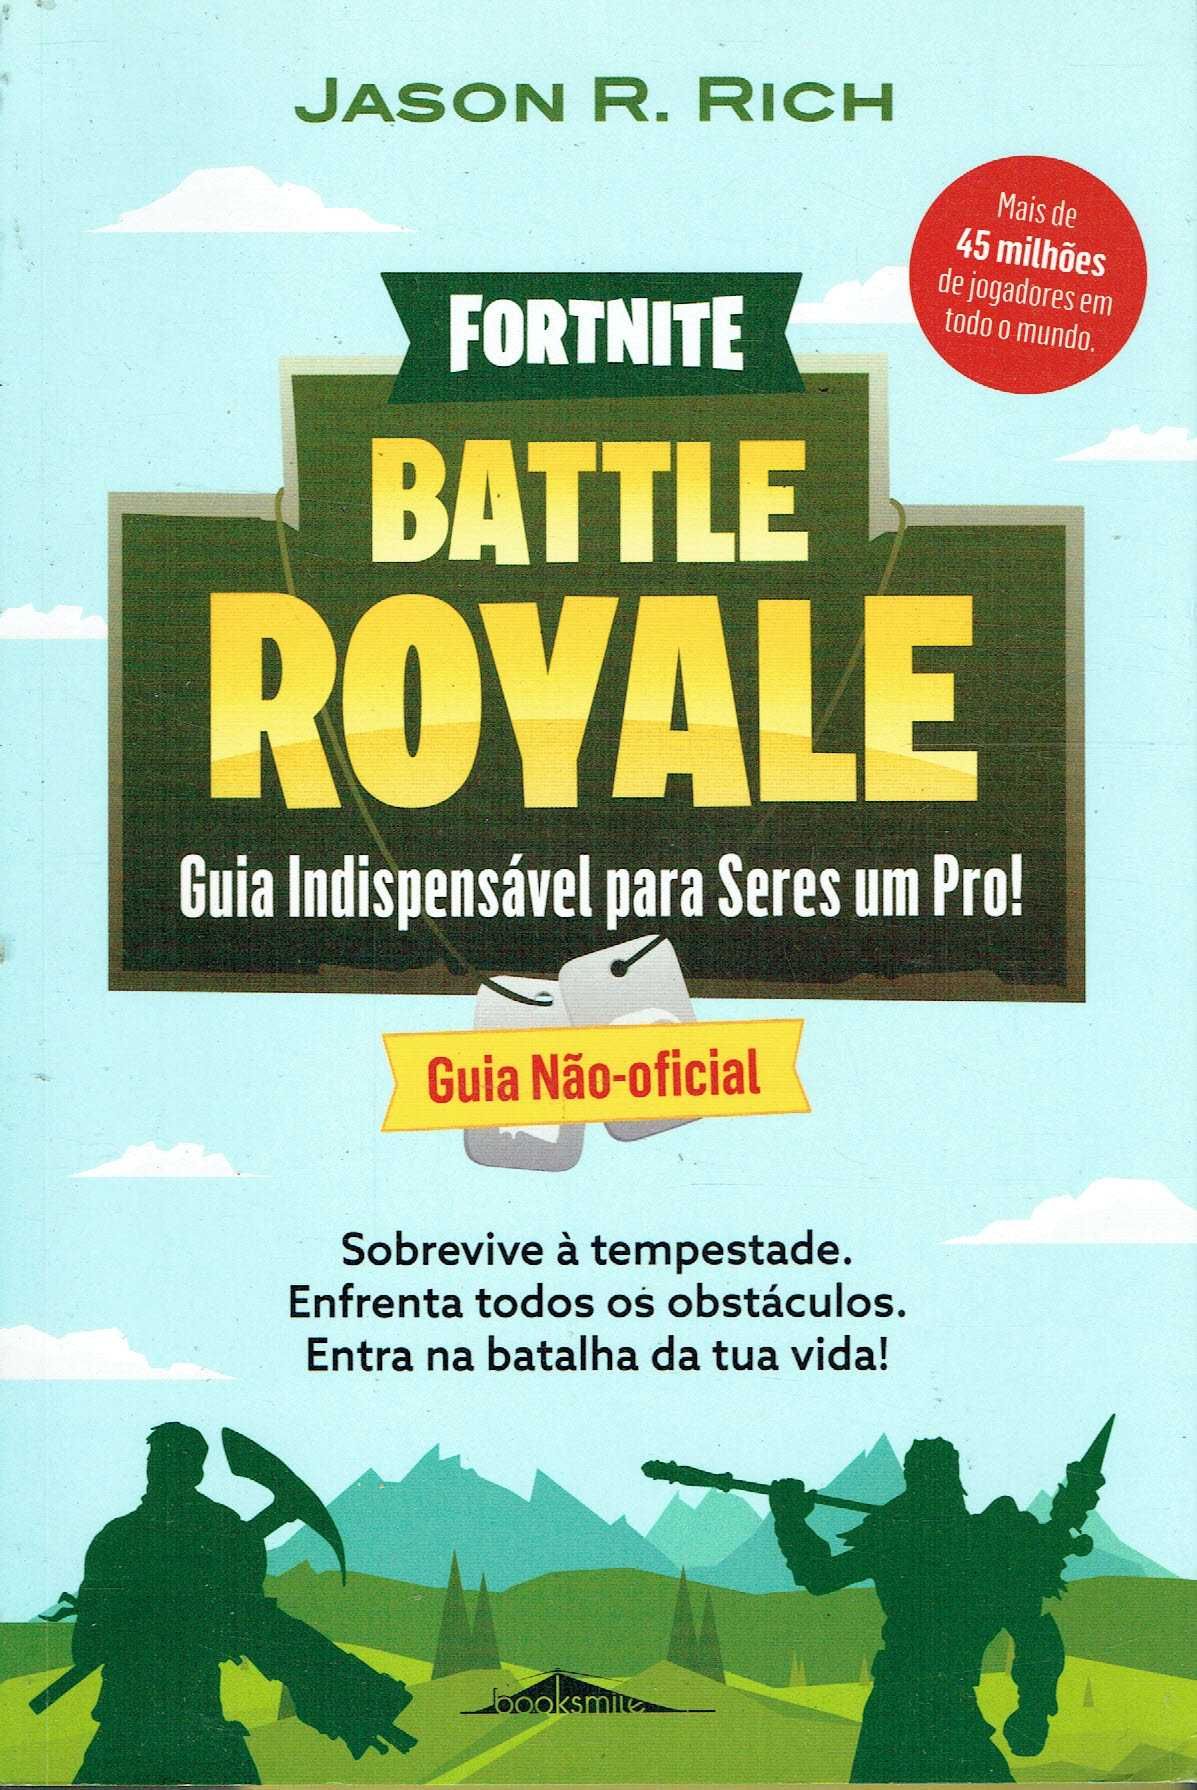 14470

Fortnite Battle Royale